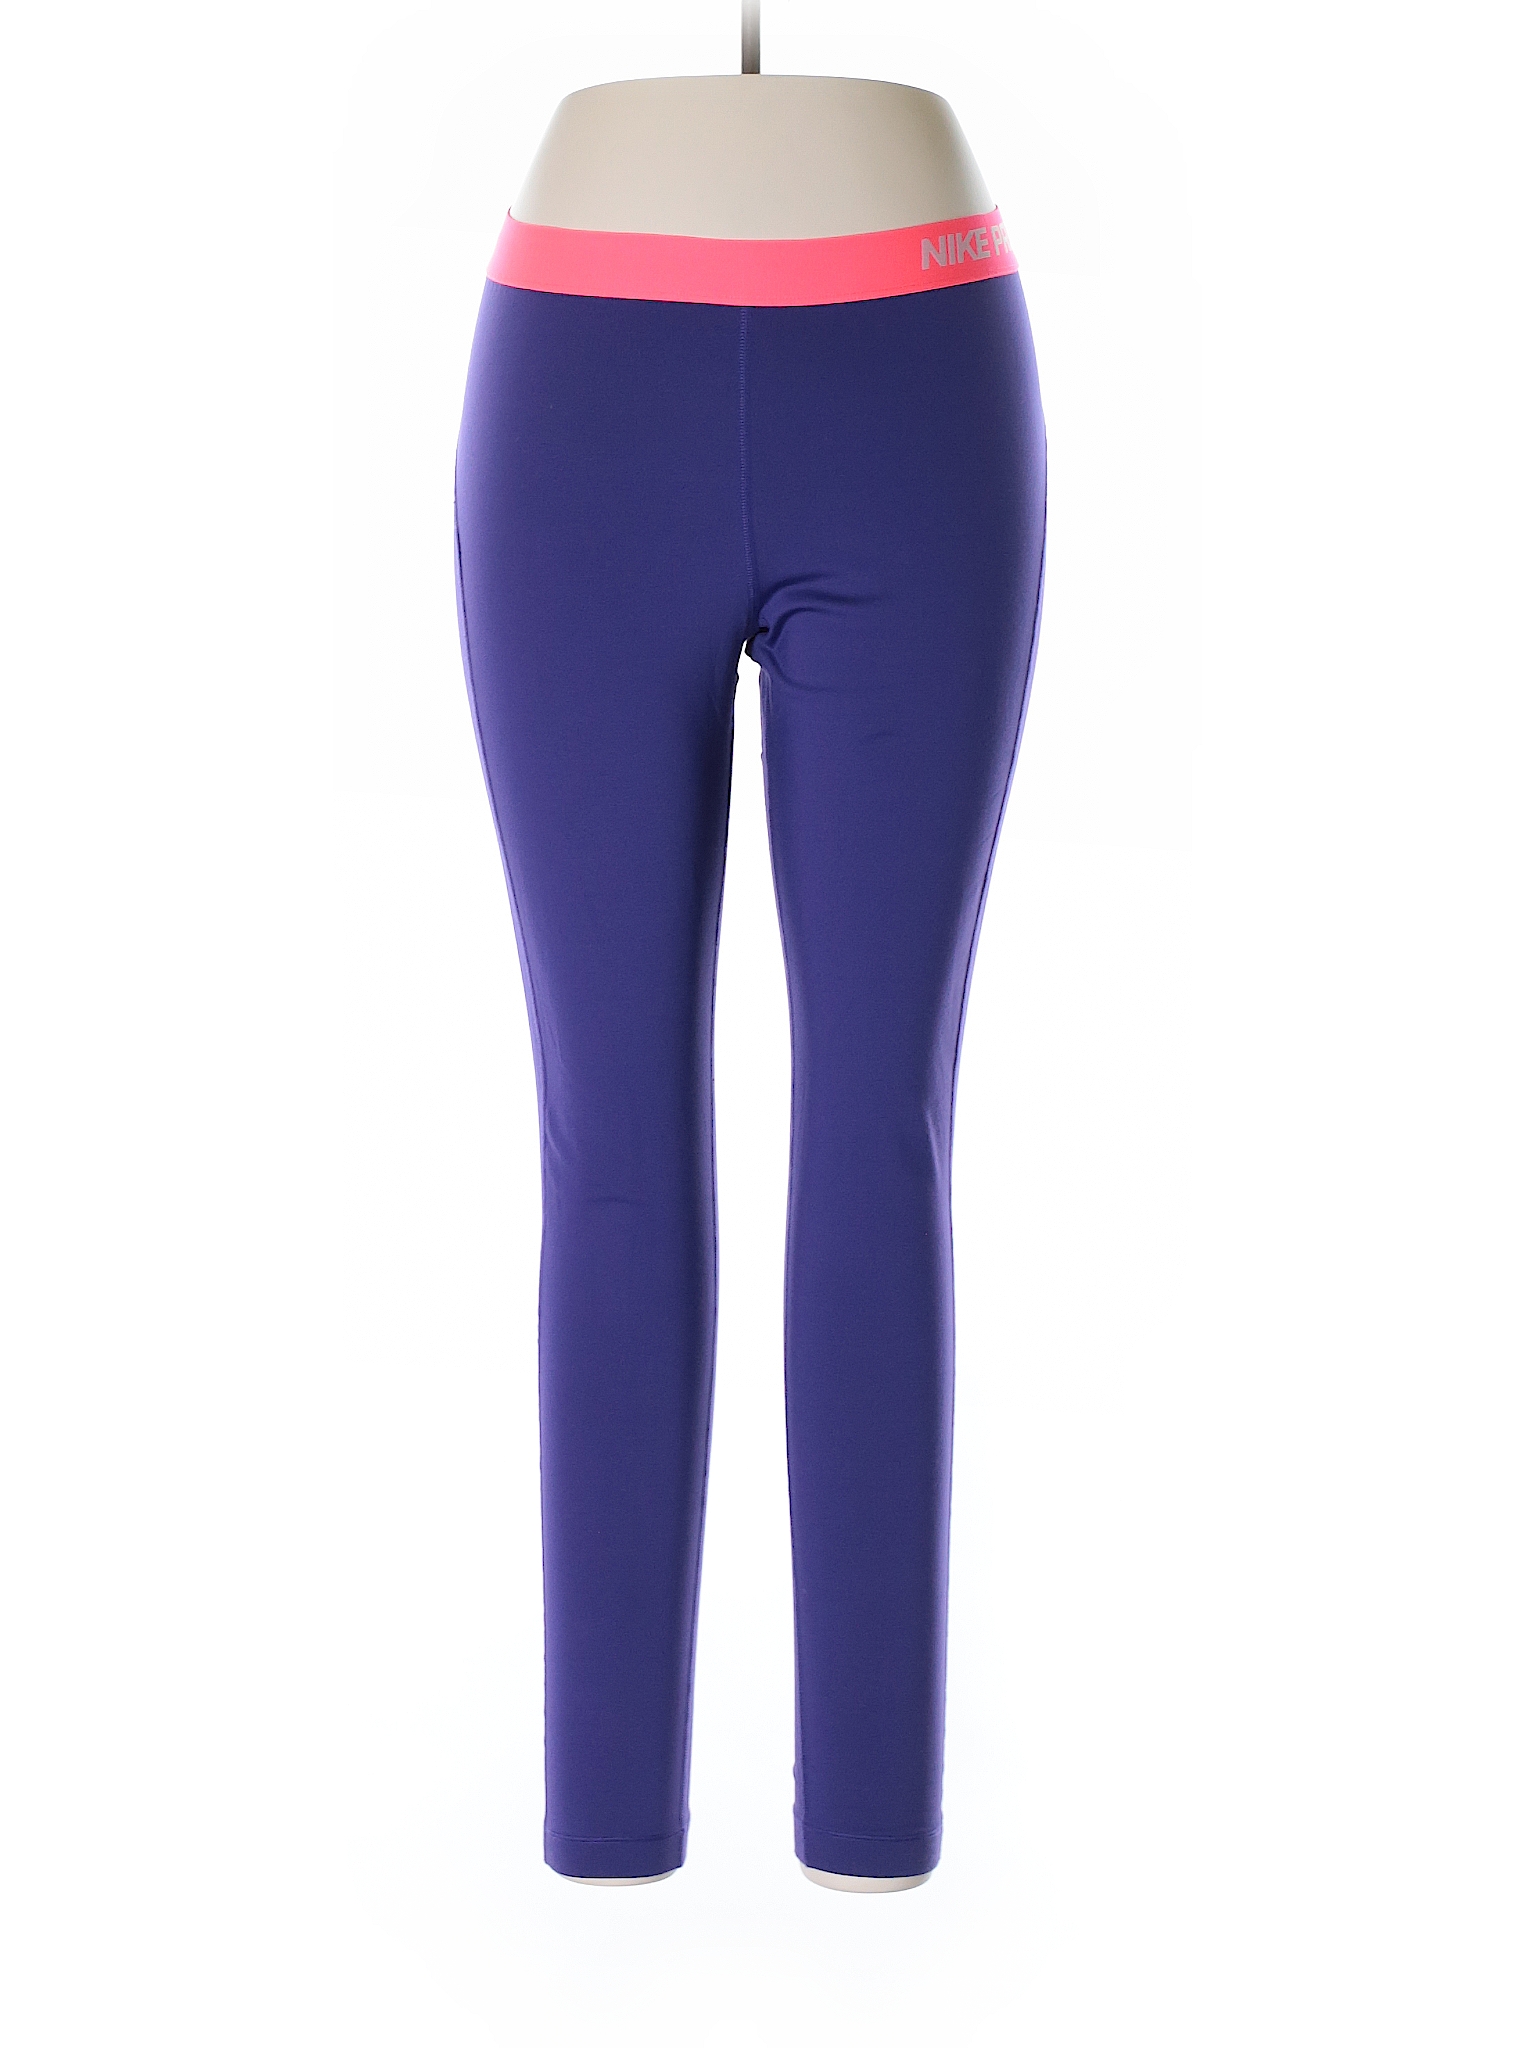 Nike Color Block Dark Purple Active Pants Size XL - 68% off | thredUP